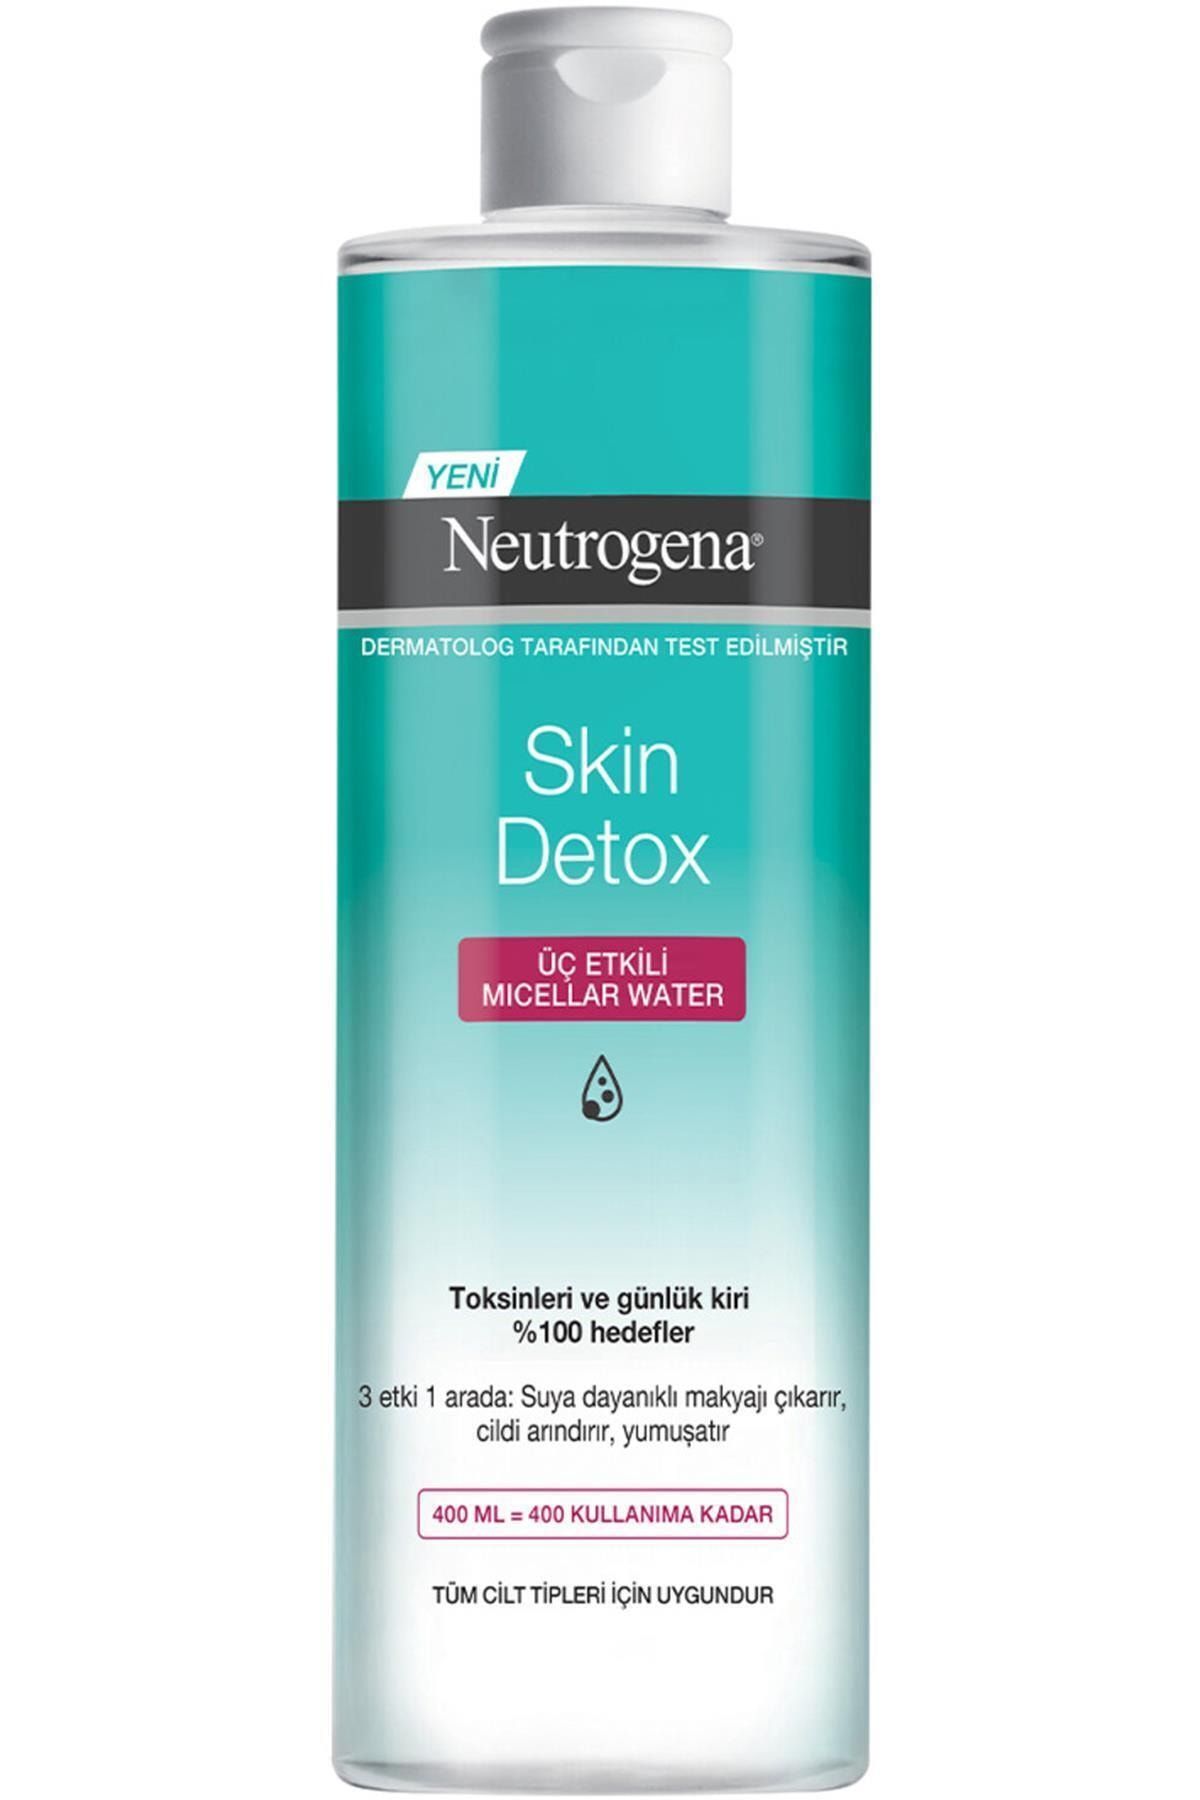 Neutrogena Marka: Skin Detox 3 Etkili Micellar Water 400ml Kategori: Oje